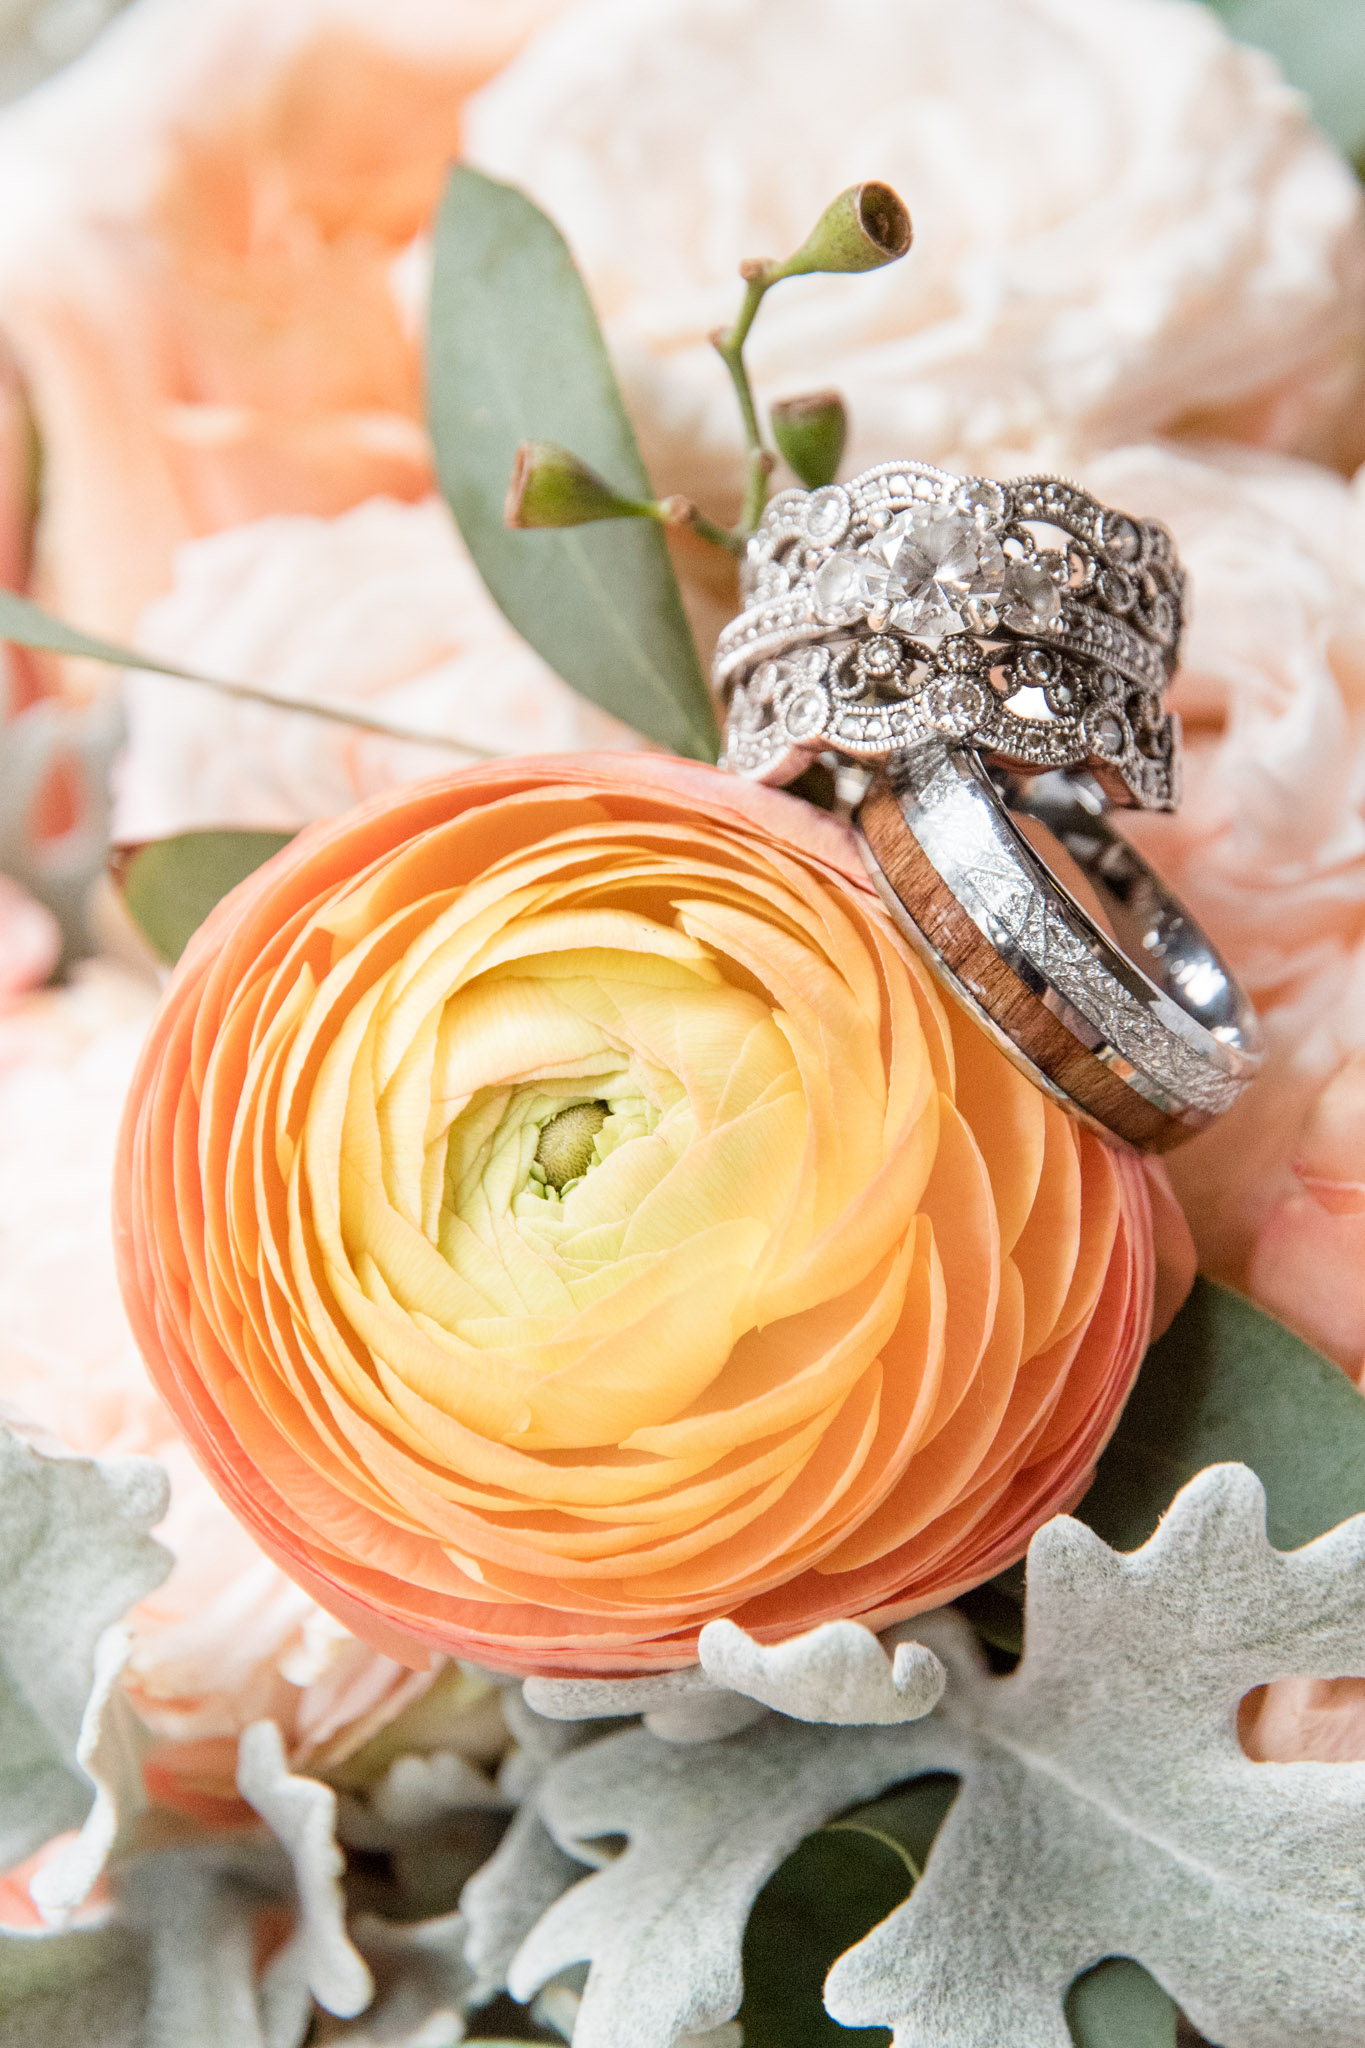 Wedding rings sit on ranunculus.